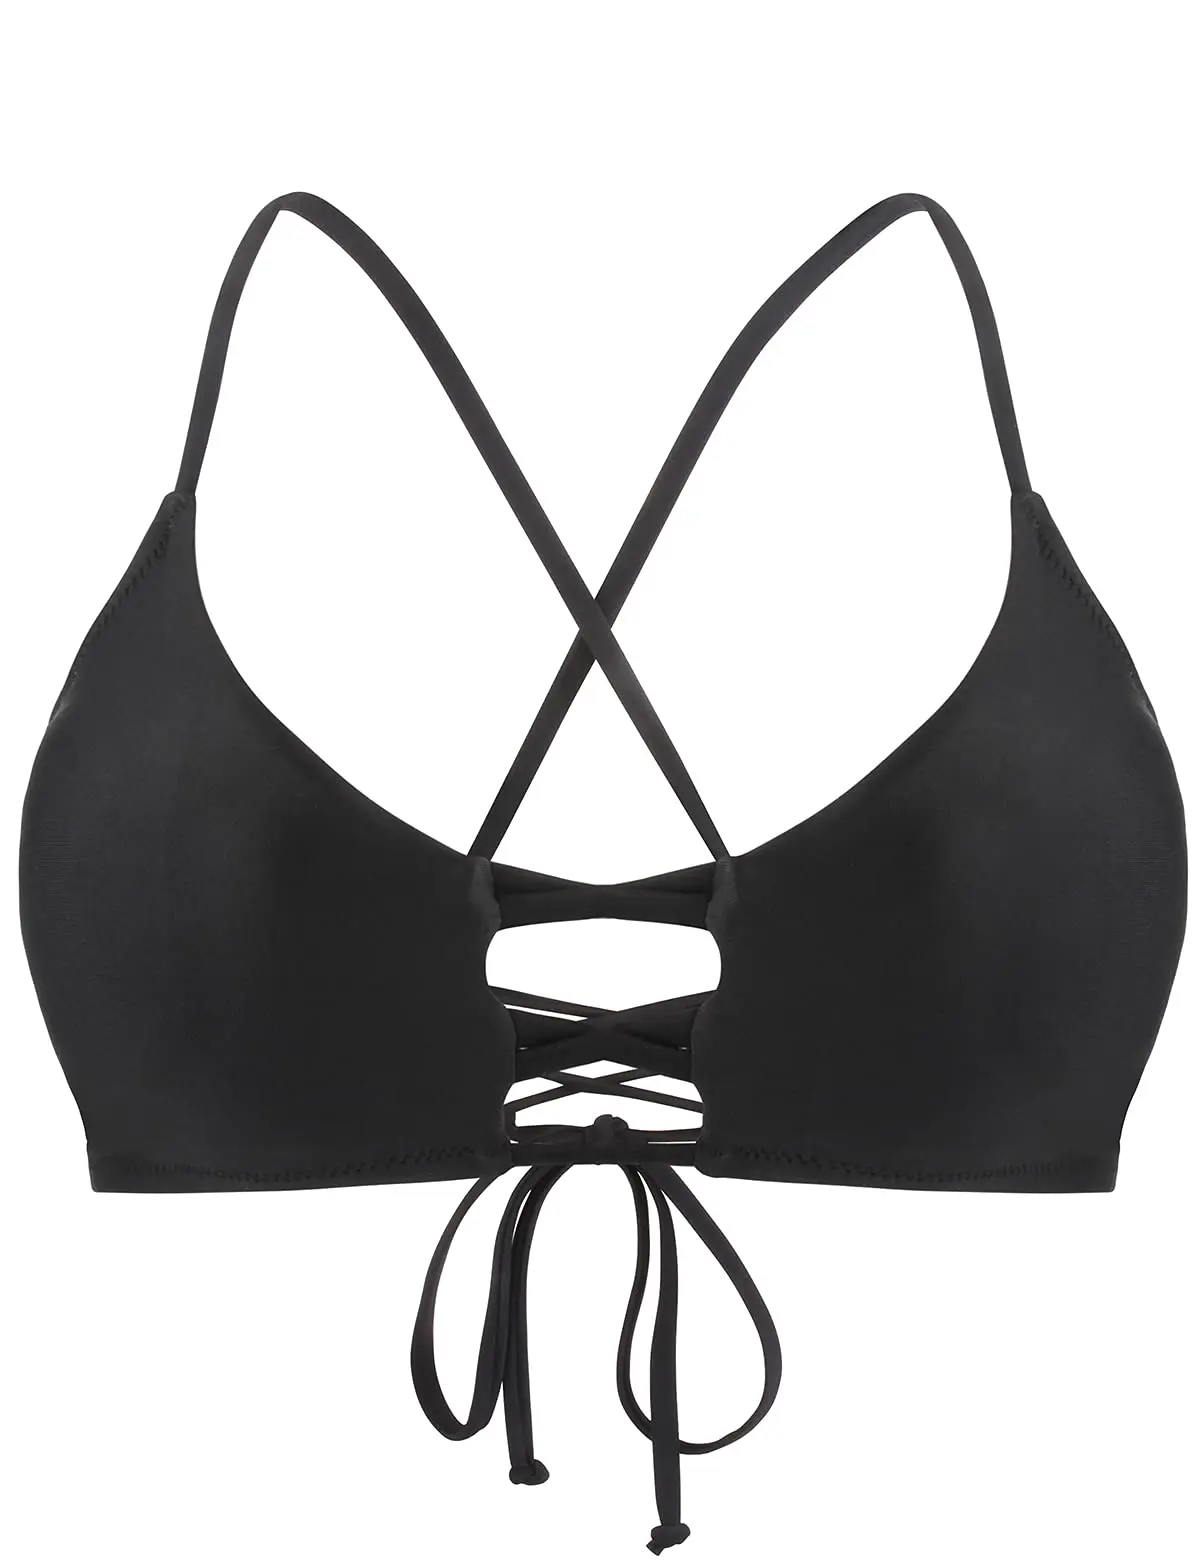 Women's Summer Molded Cup Push Up Triangle Bikini Top Swimsuit - Buy ...